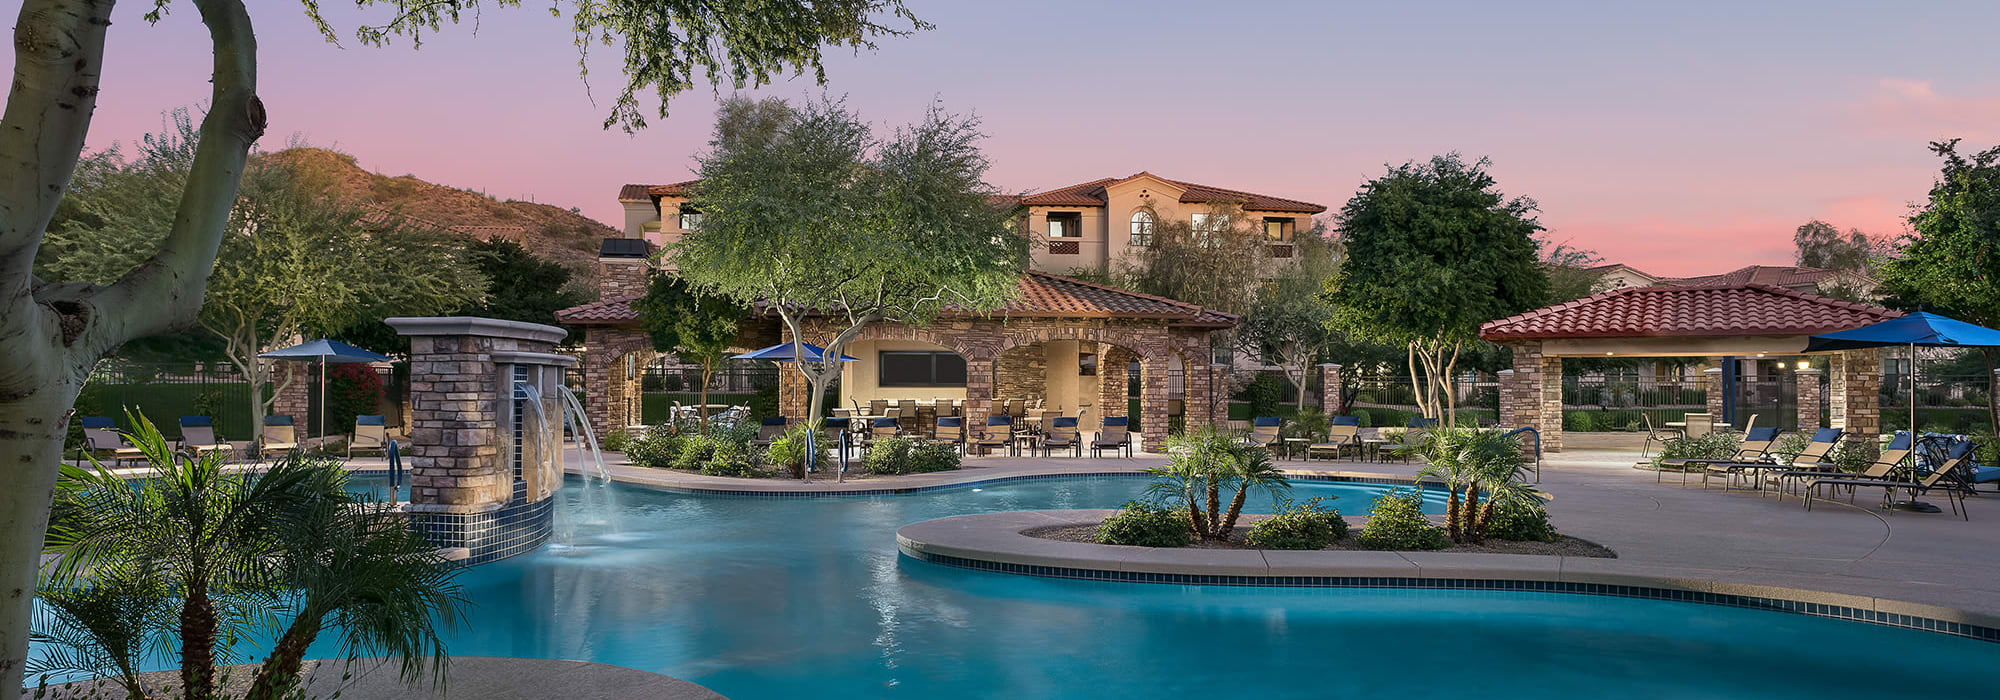 Luxury pool at Phoenix, Arizona